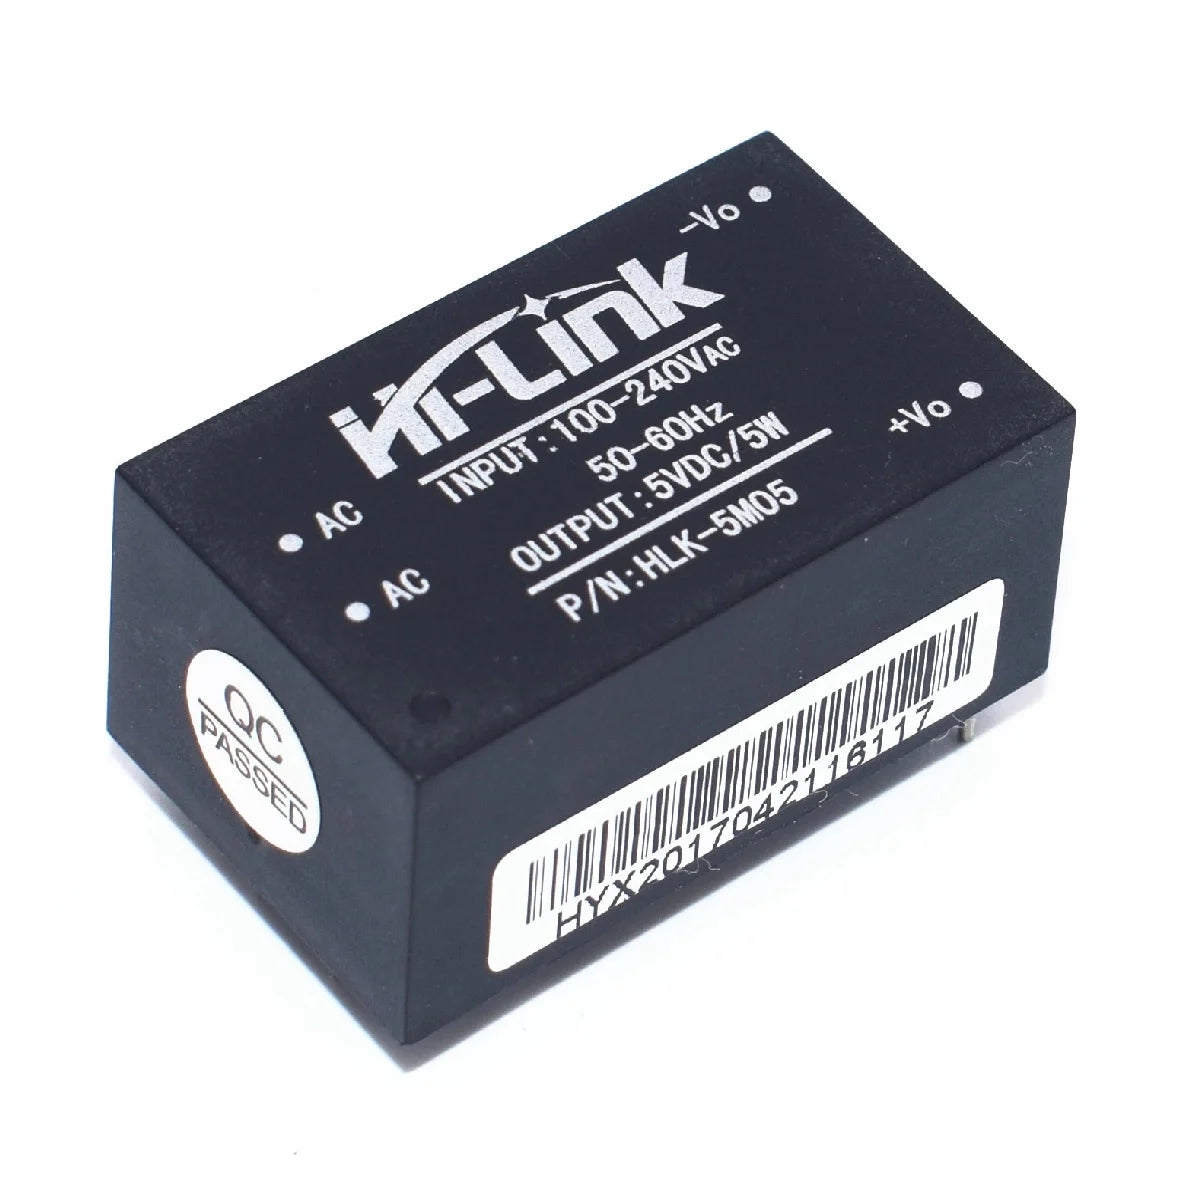 Hi Link HLK-5M05 5V 5W AC to DC Power Supply Module